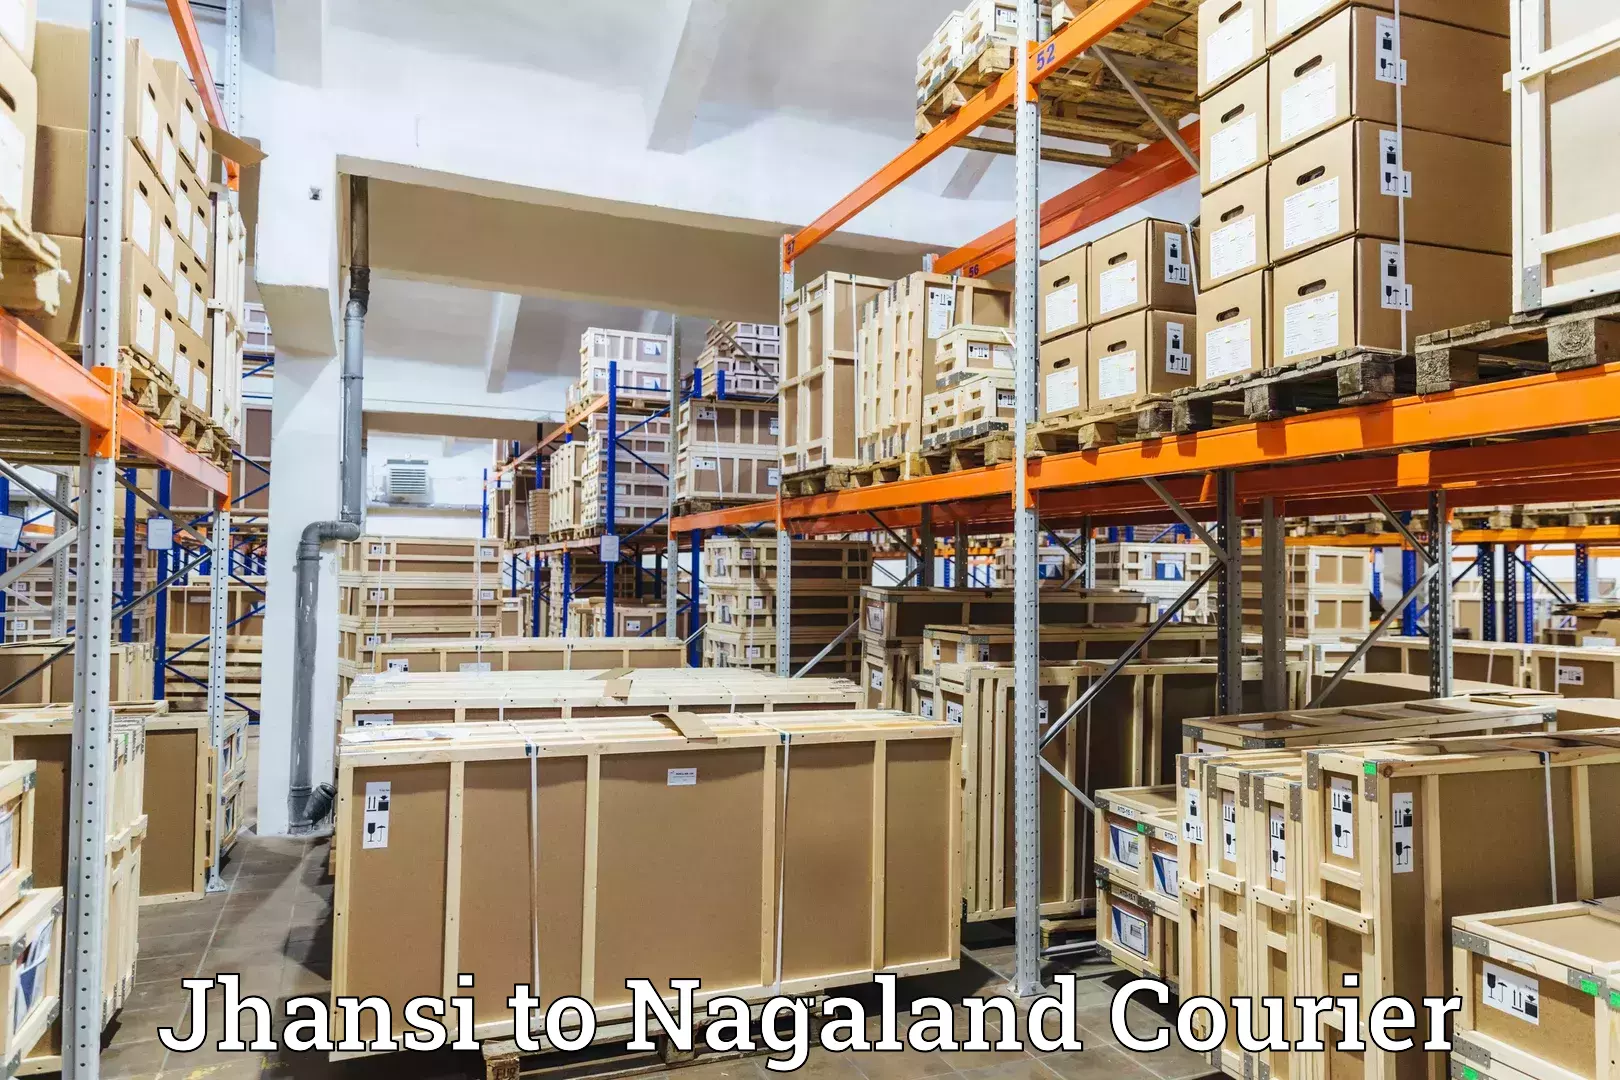 Logistics service provider Jhansi to Nagaland